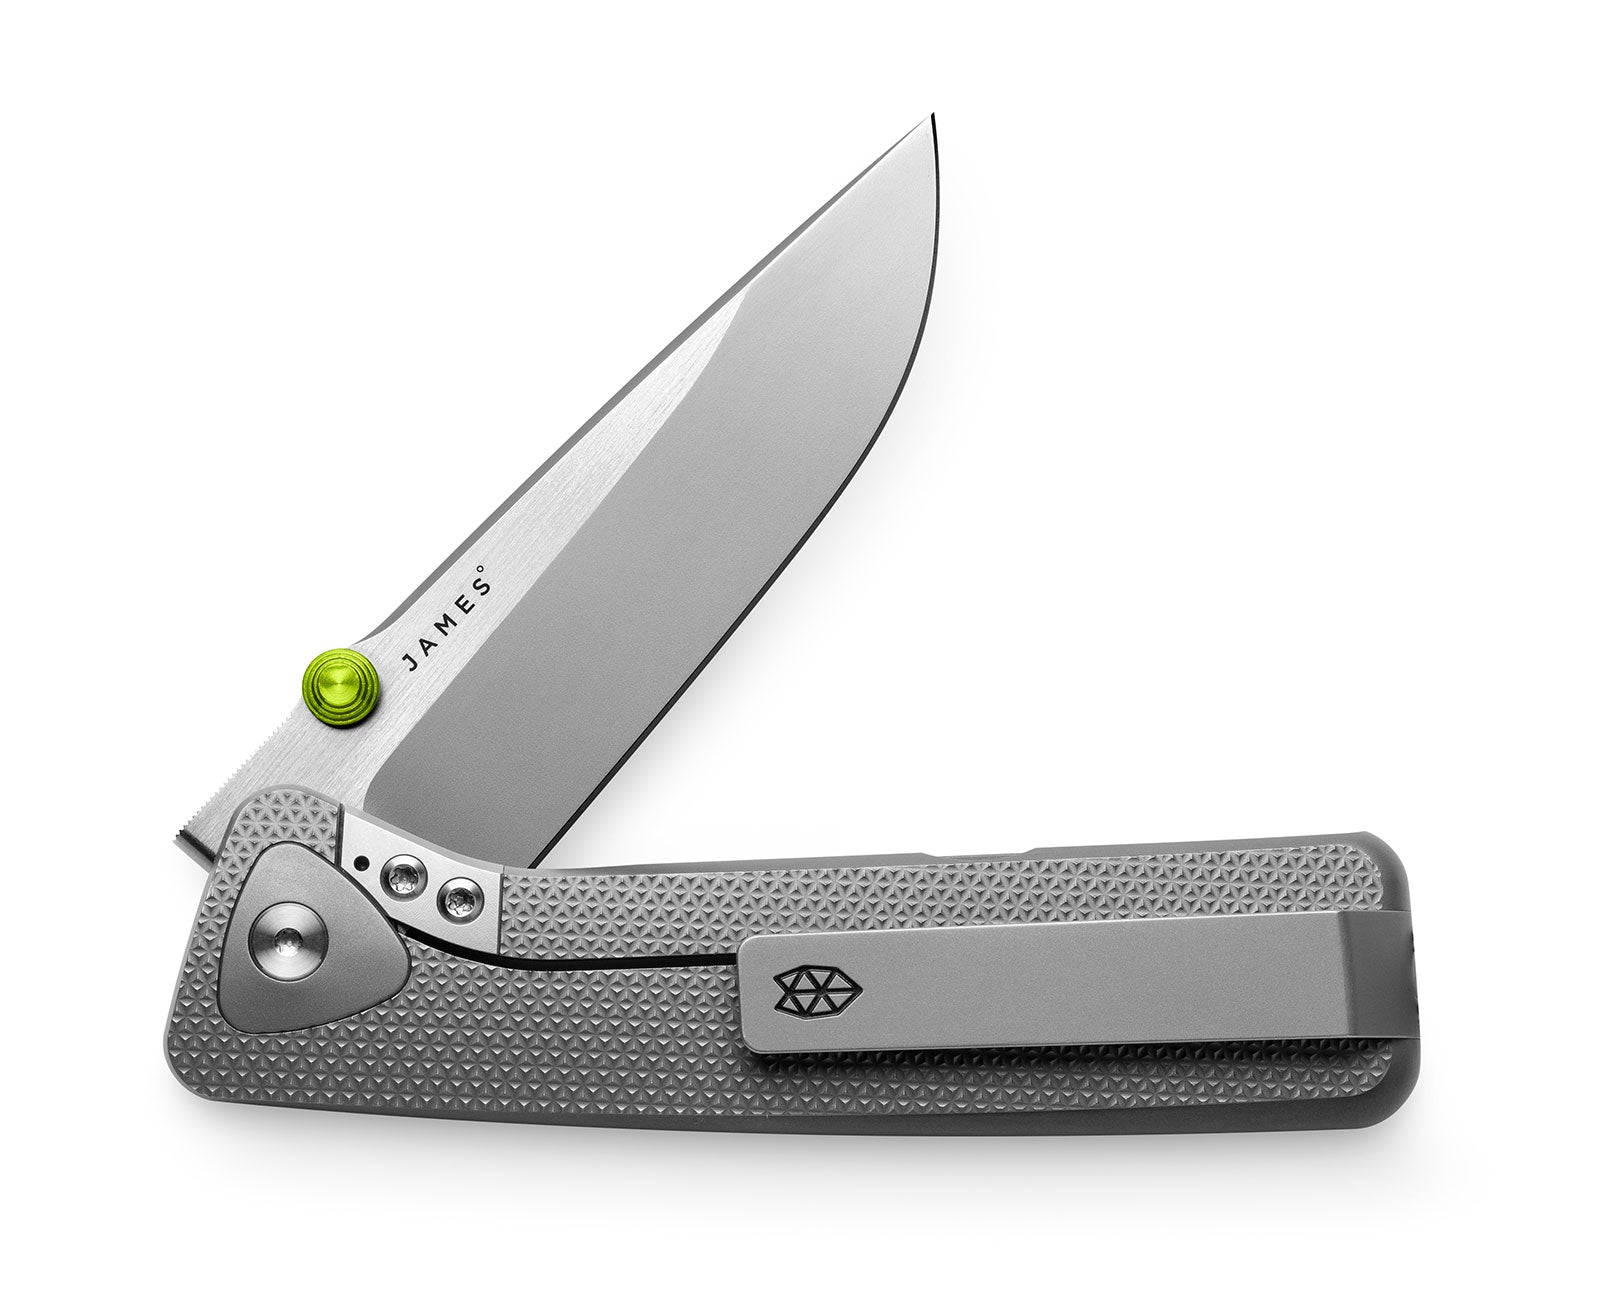 The Barnes - Titanium Integral EDC Knife